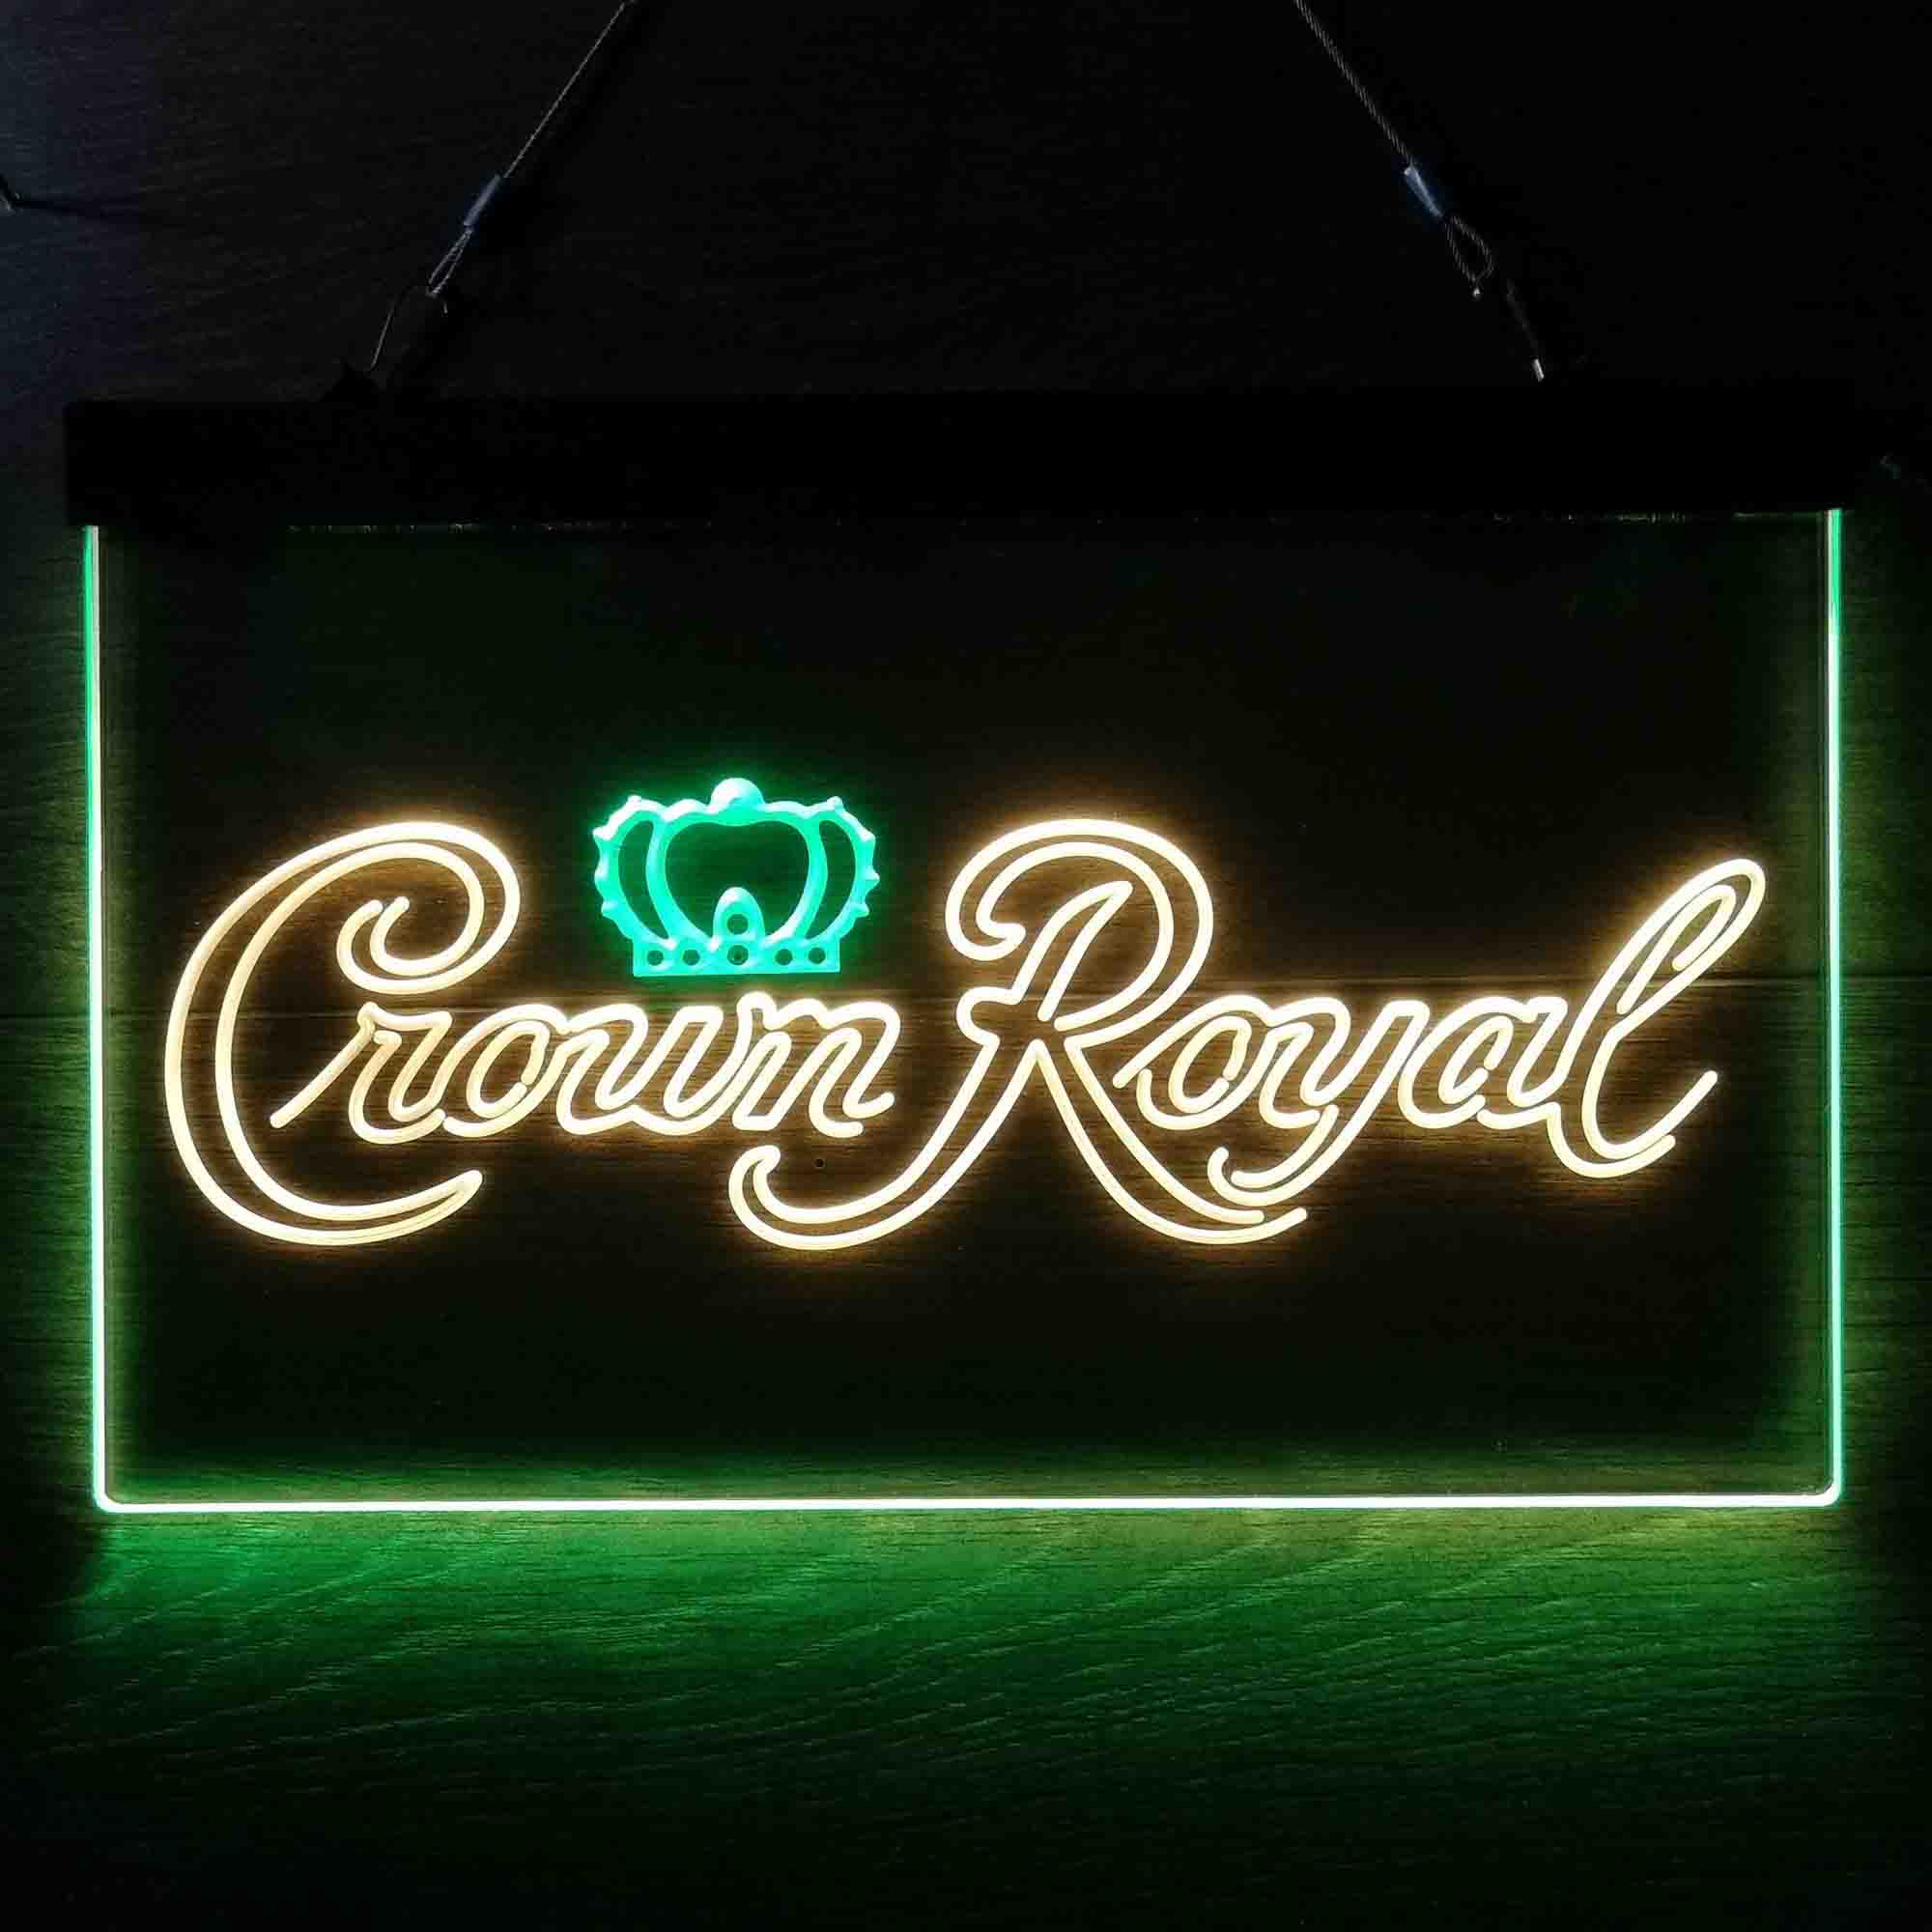 Crown Royal Pub Wine Neon-Like LED Sign - ProLedSign